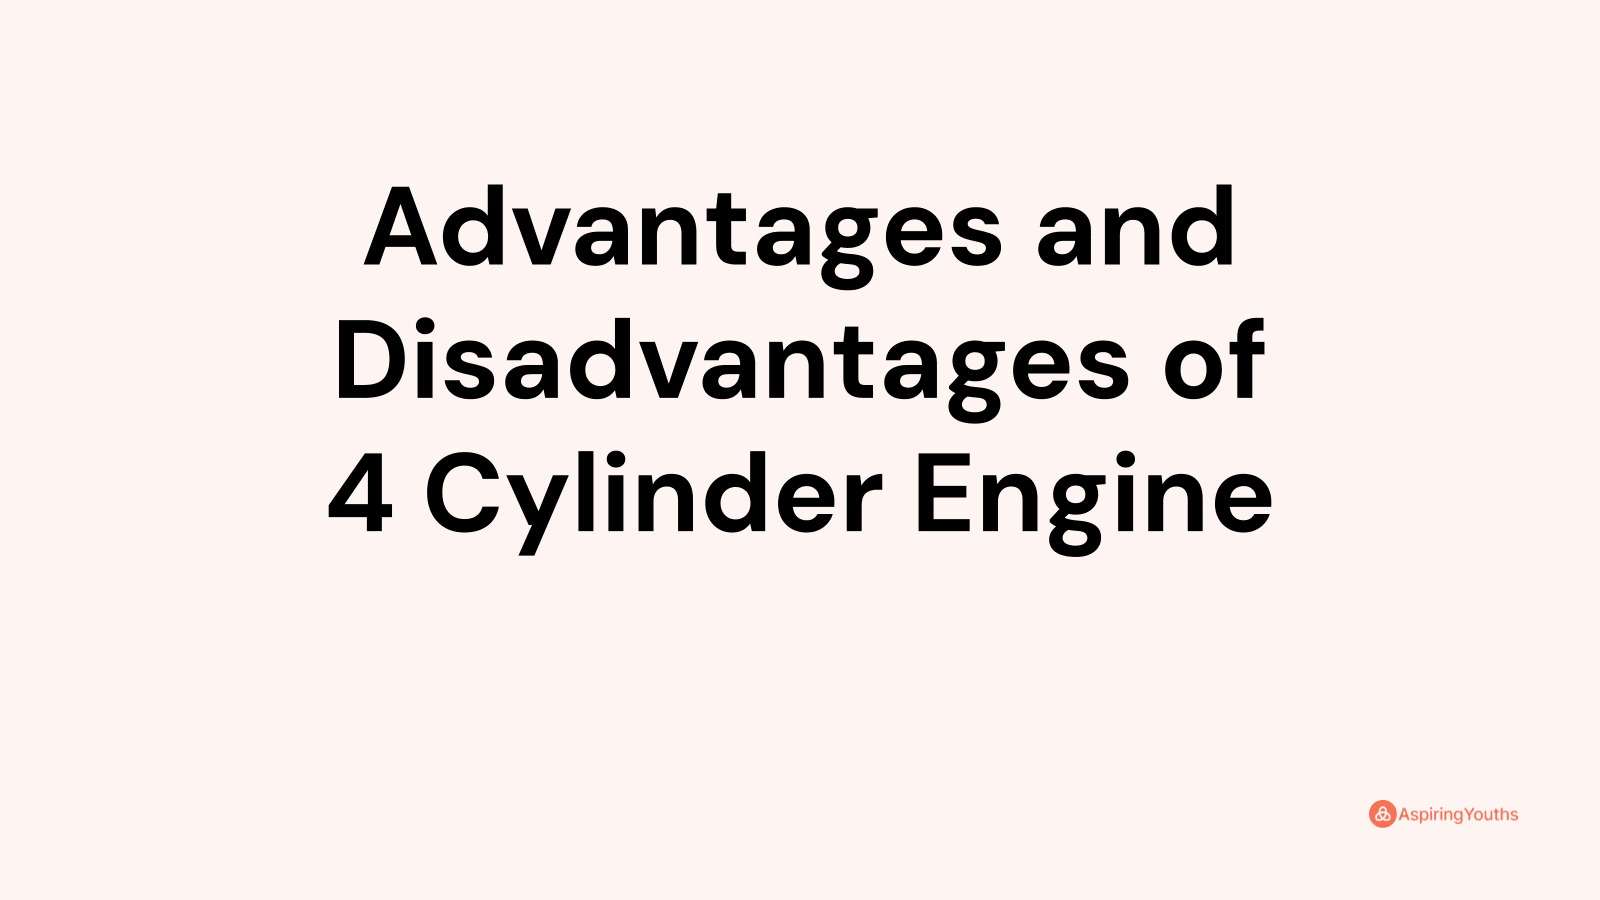 Advantages and disadvantages of 4 Cylinder Engine